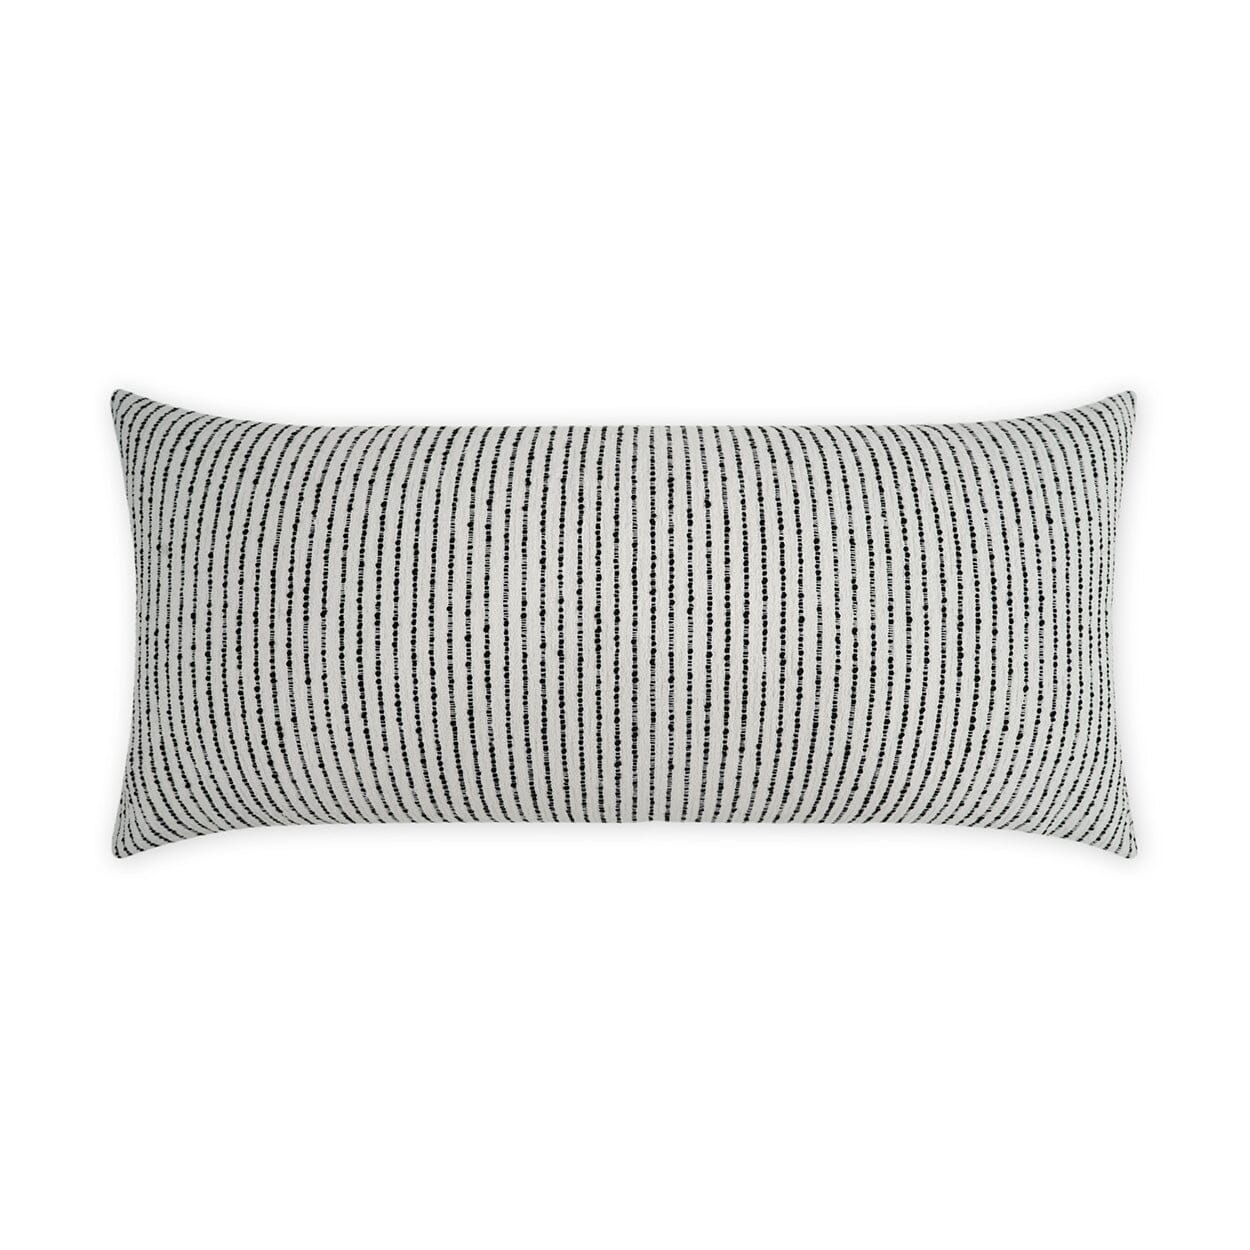 D.V. Kap 12" x 24" Outdoor Lumbar Pillow | Burson Domino Pillows D.V Kap Home